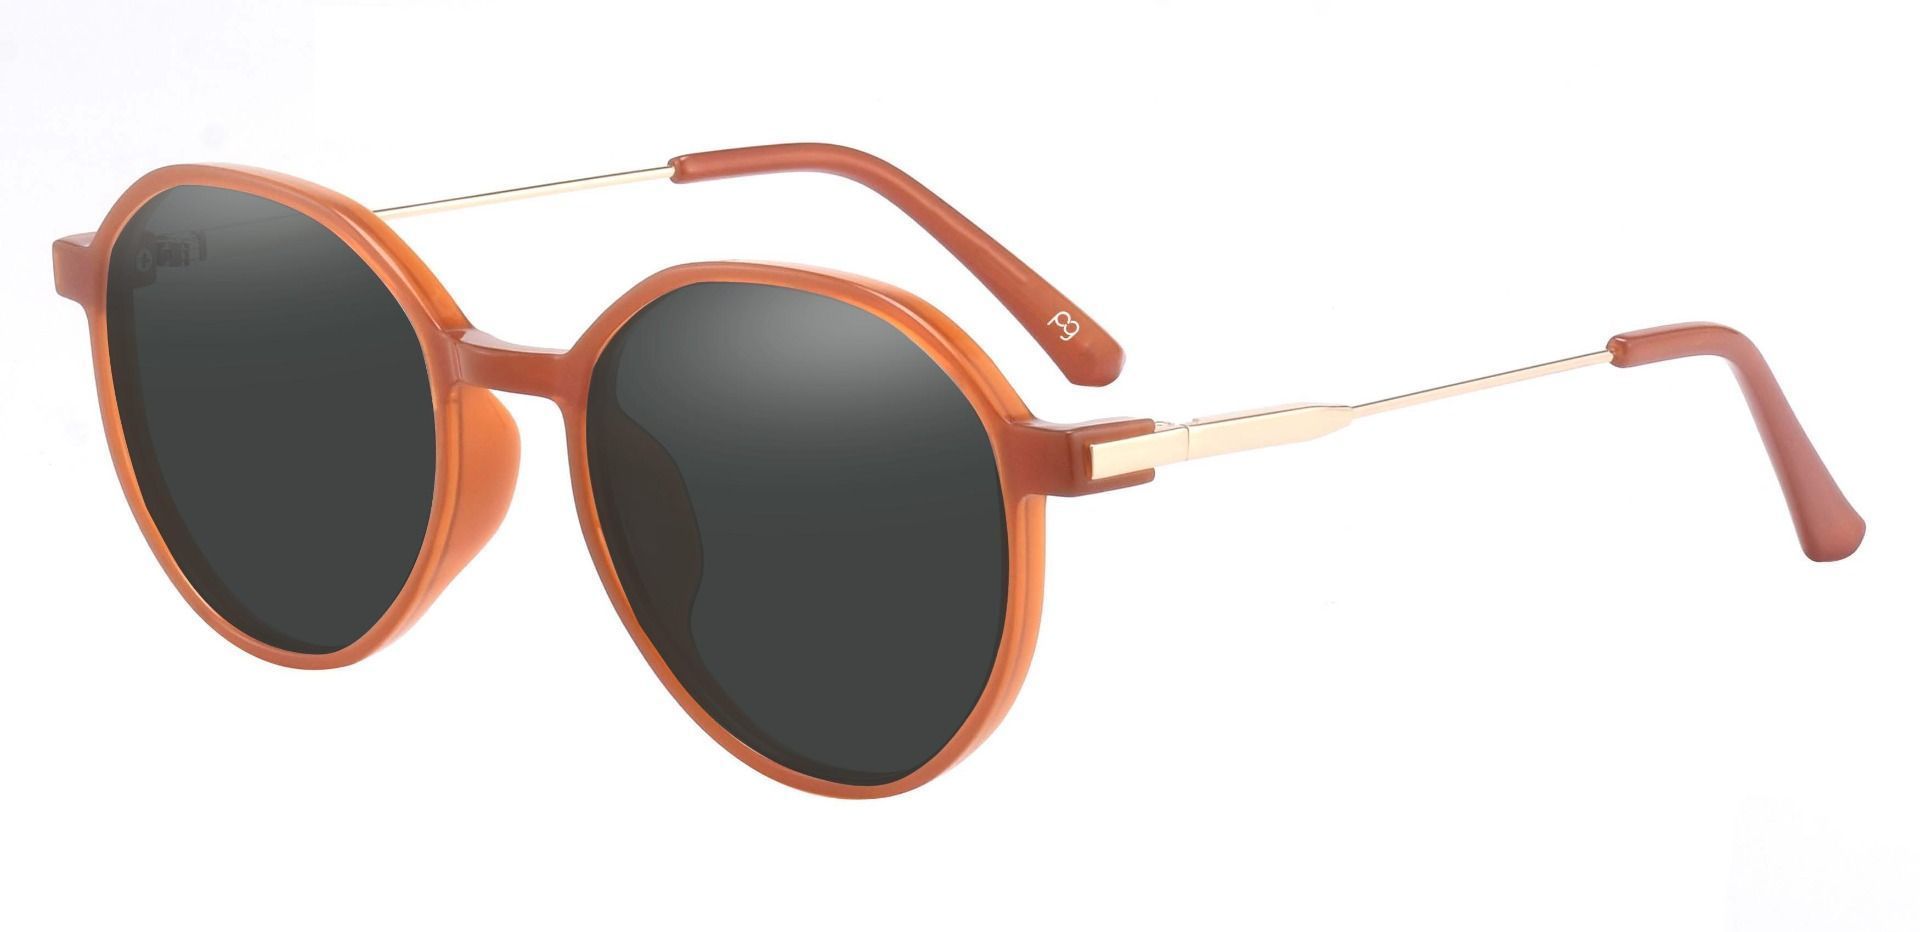 Daytona Geometric Non-Rx Sunglasses - Brown Frame With Gray Lenses